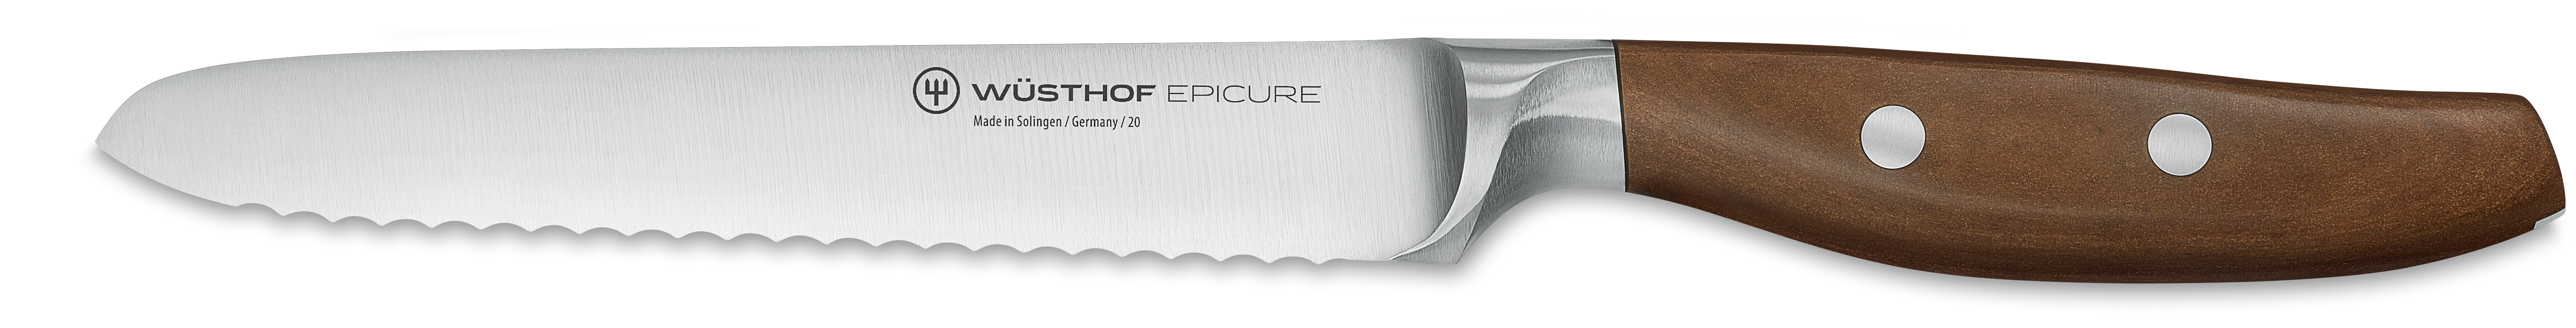 Aufschnittmesser / Serrated utility knife